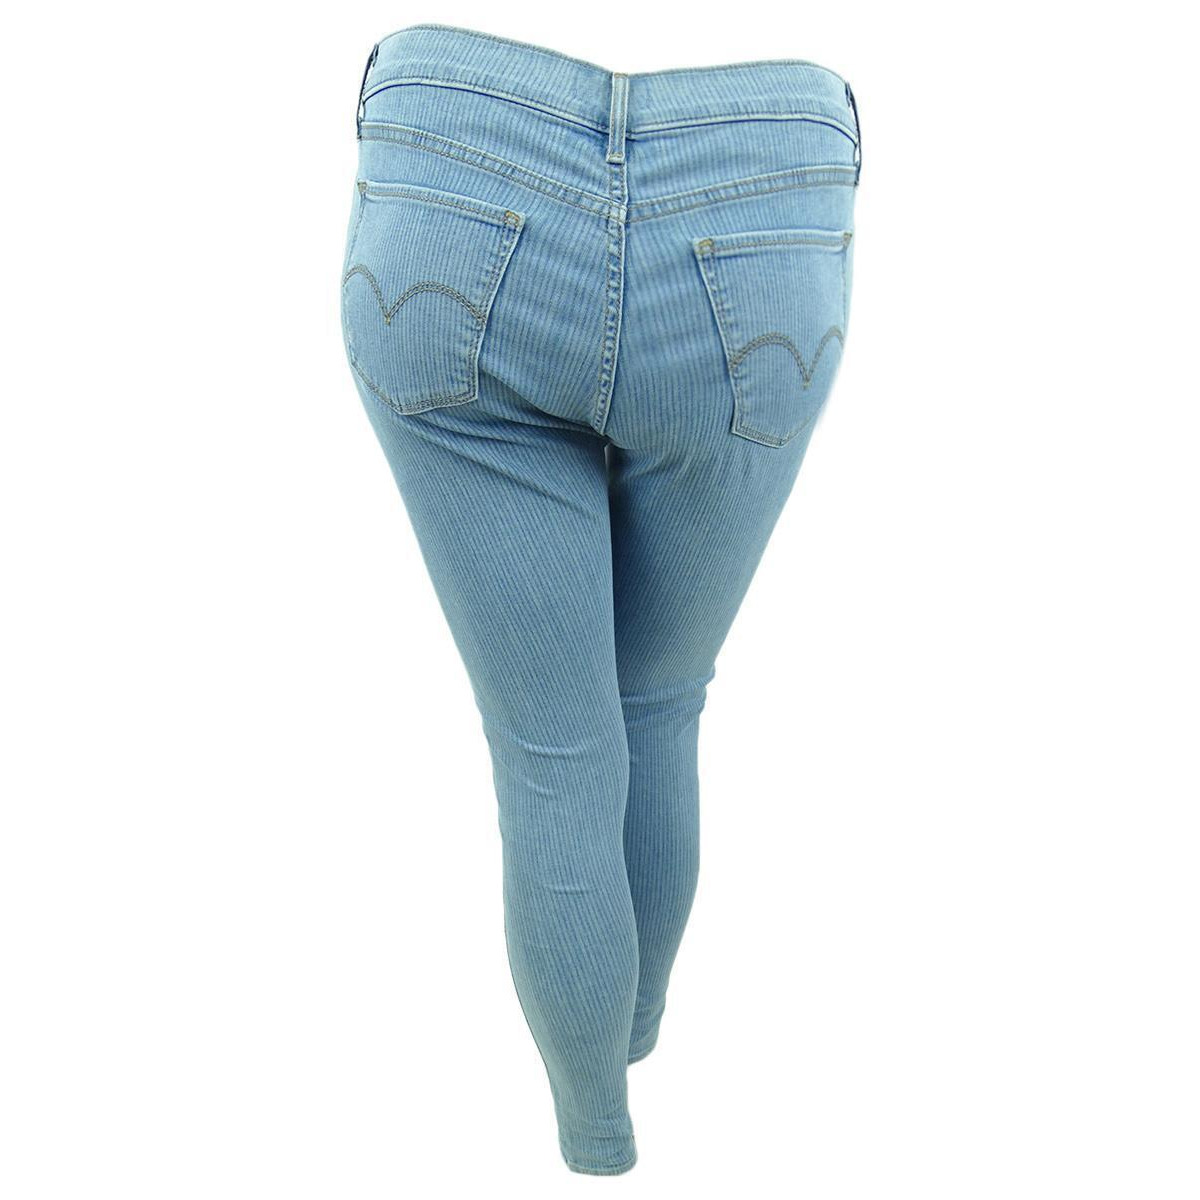 Levi's Women's 710 Striped Super Skinny Jeans alternate image